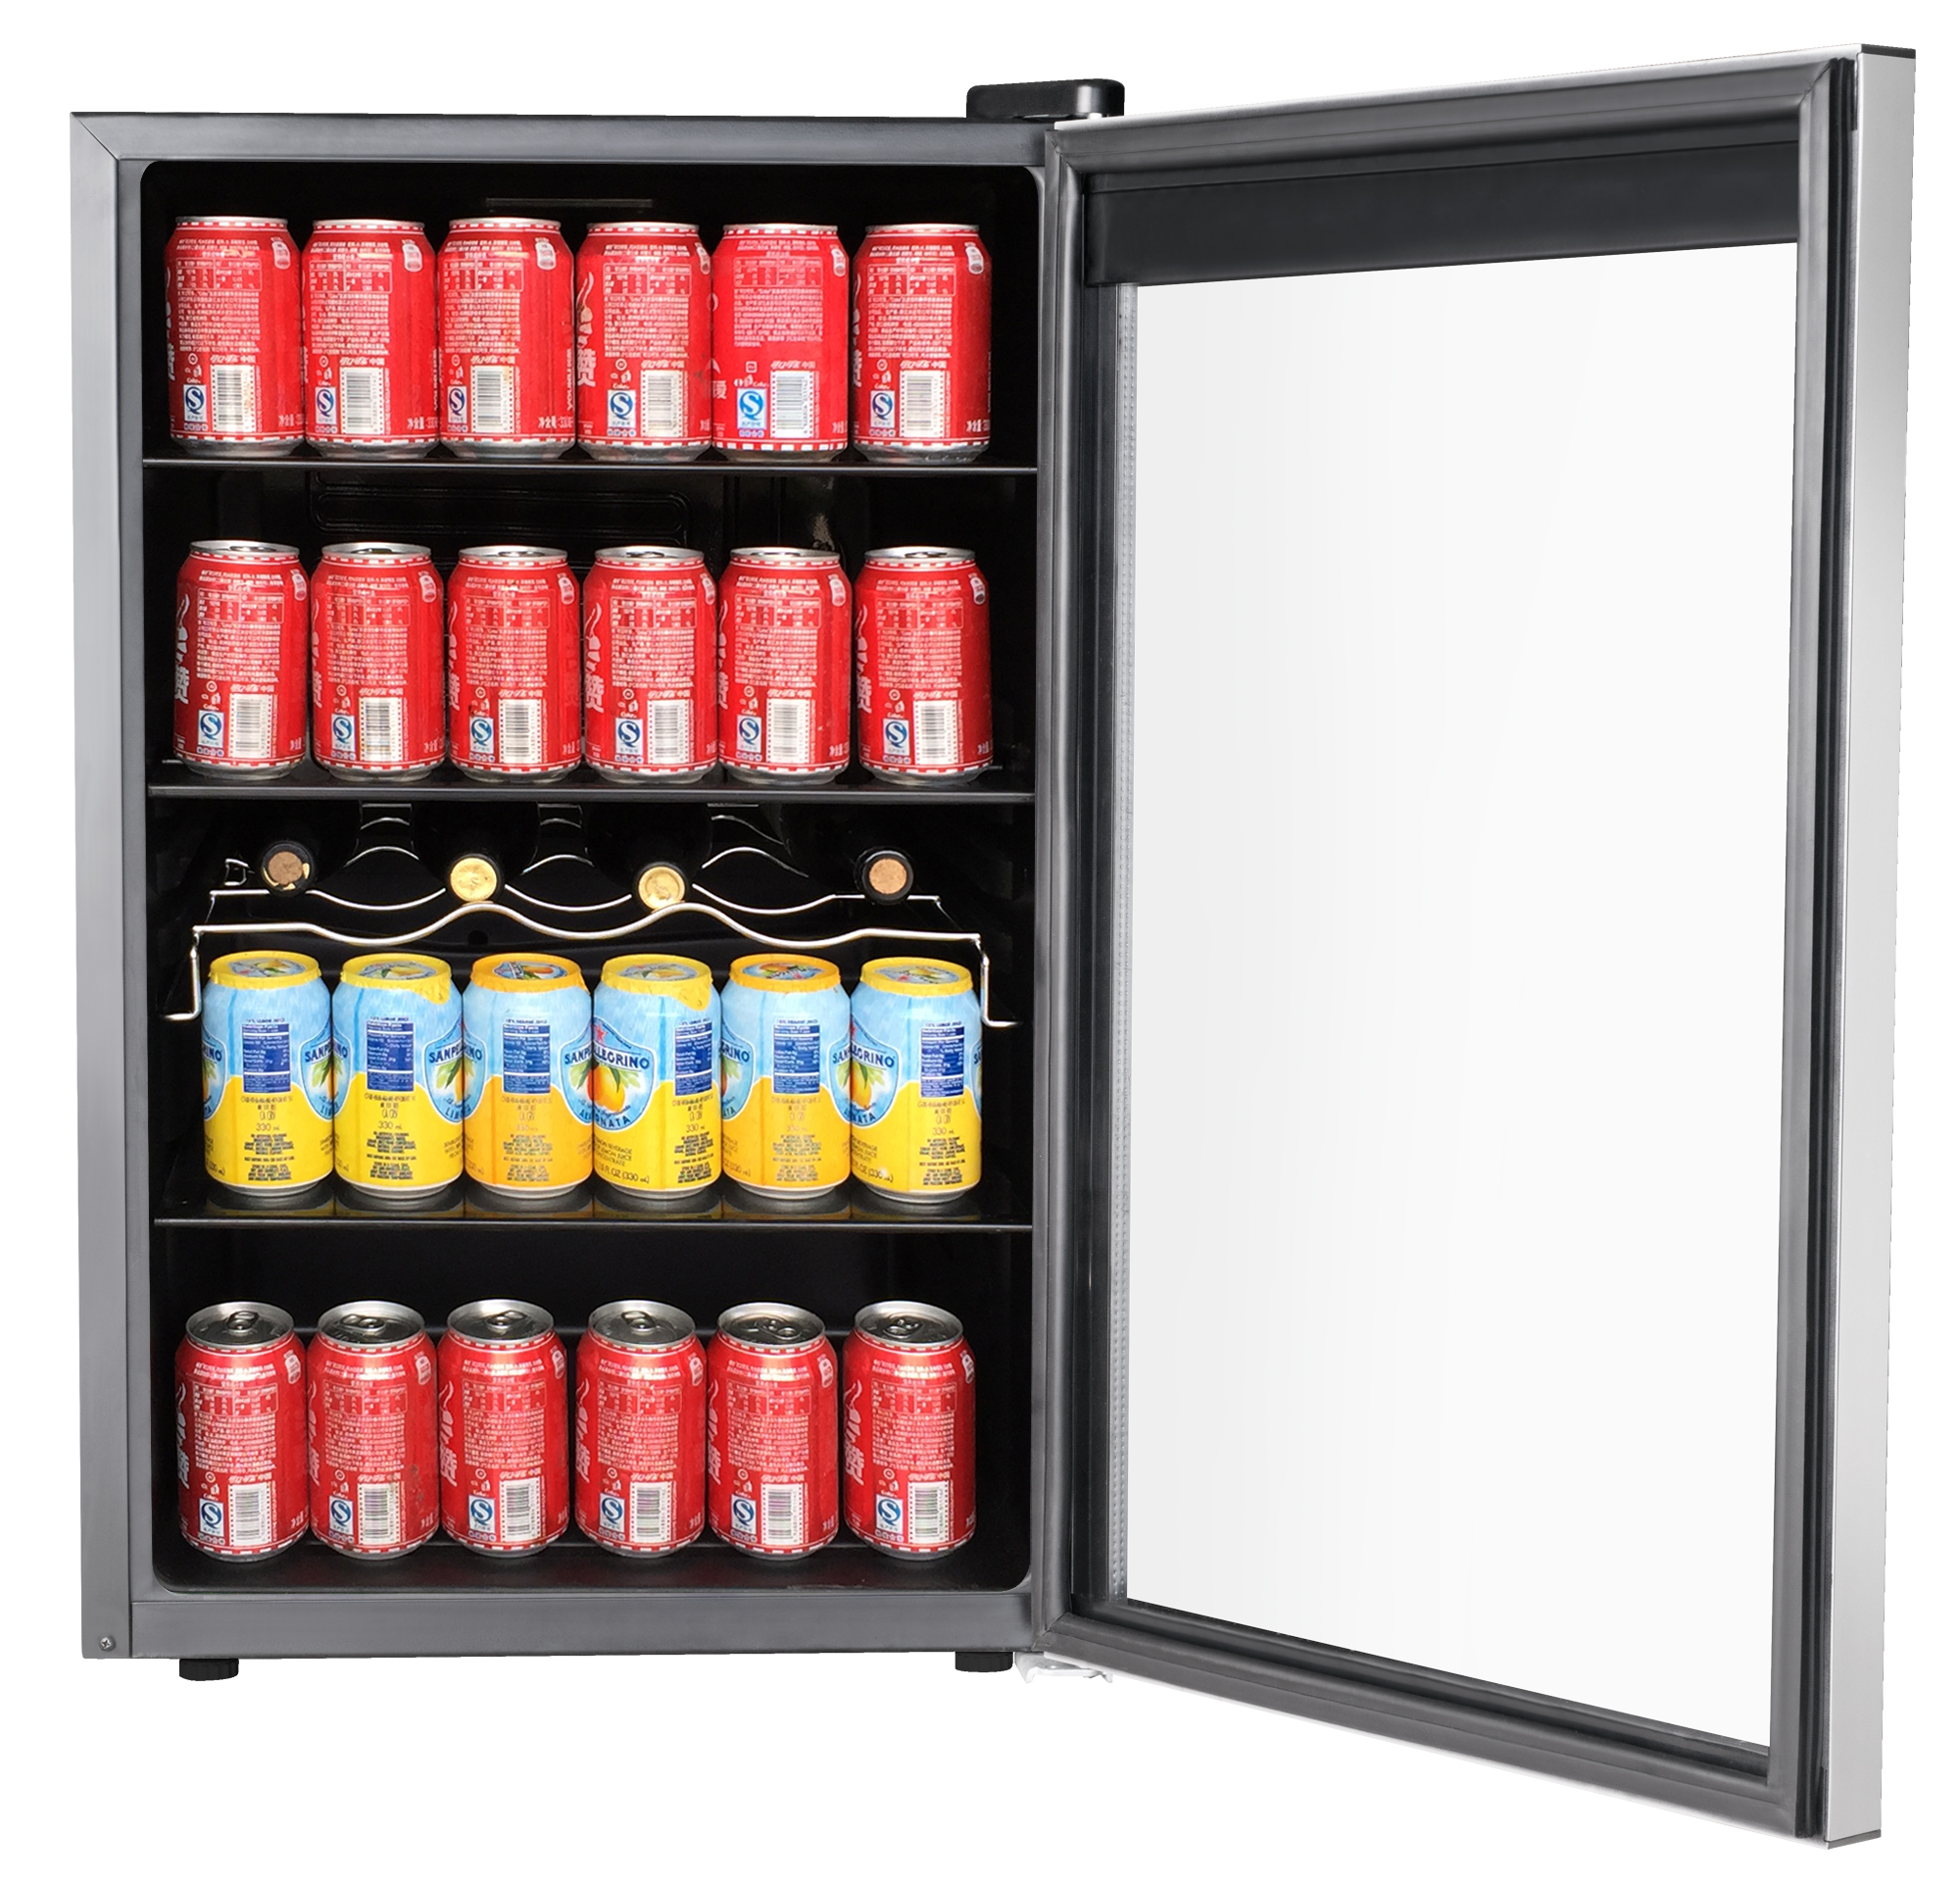 RCA 110 Can & 4 Bottle Beverage Center Refrigerator and Wine Cooler, (RMIS1530), Black - image 5 of 15